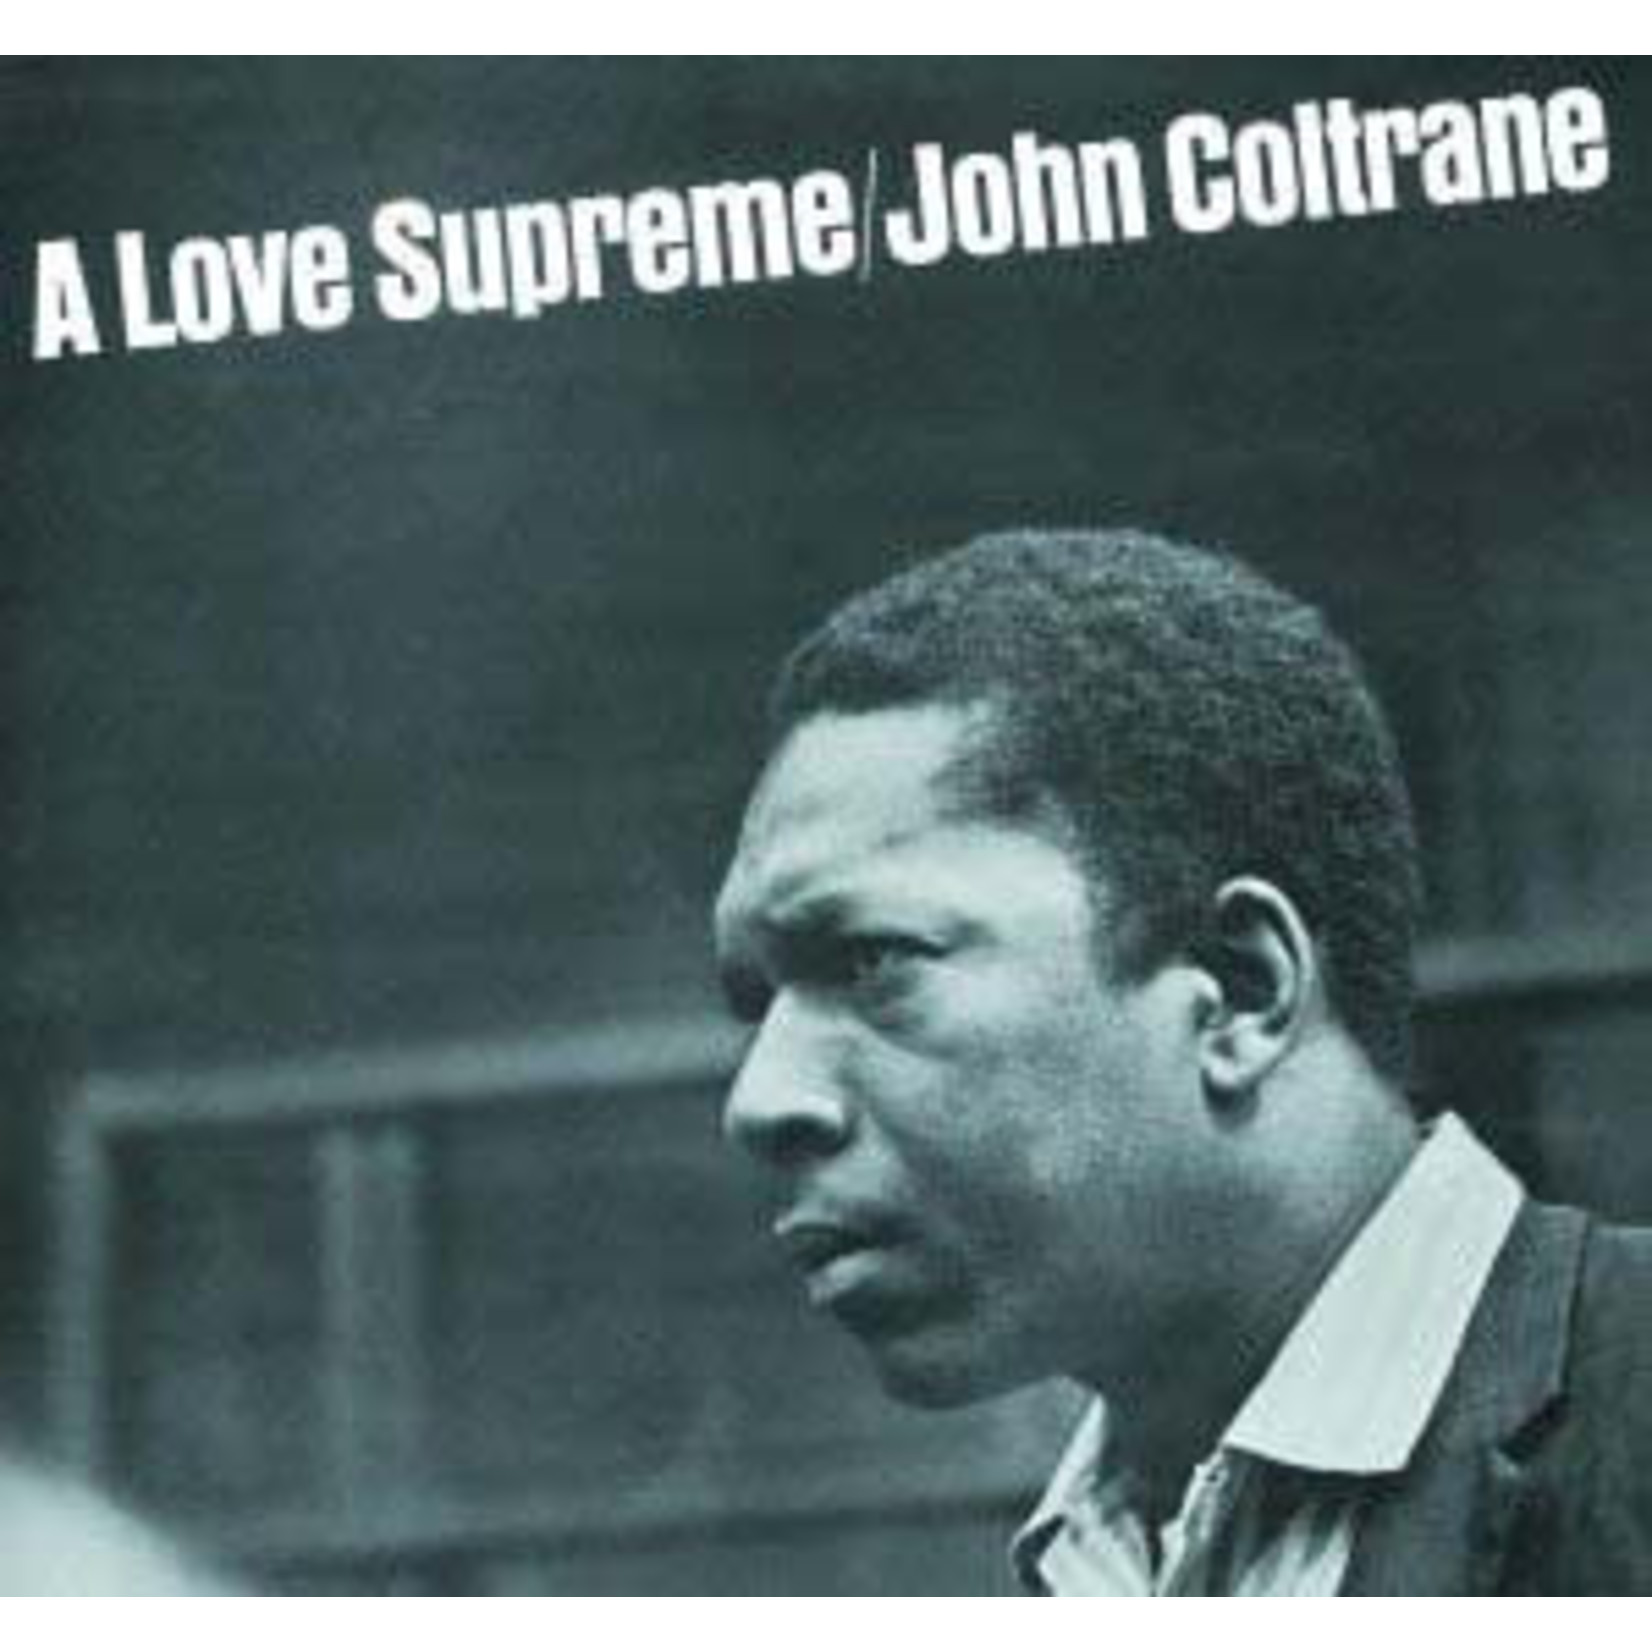 [Vintage] John Coltrane - A Love Supreme (Rainbow MCA reissuse)